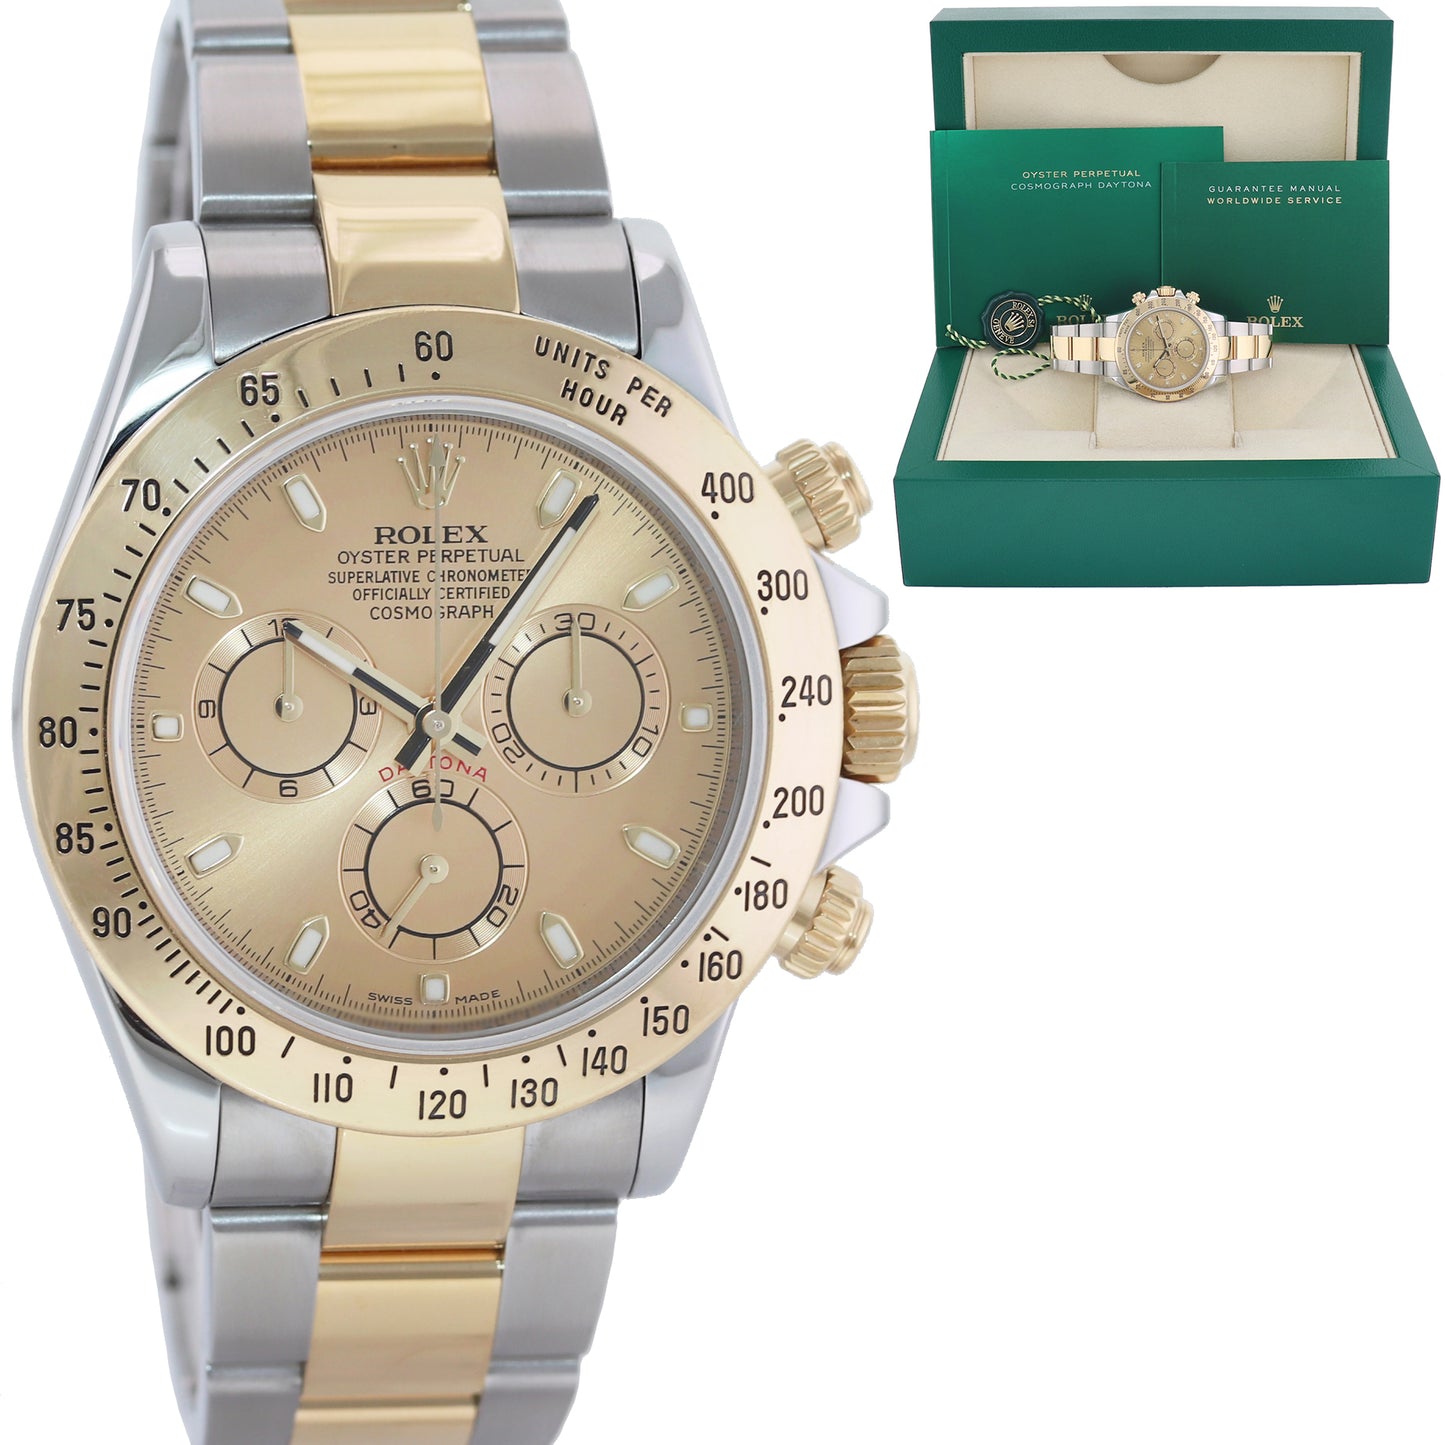 2015 MINT Rolex Daytona 116523 Chronograph Champagne Steel Gold Two Tone Watch